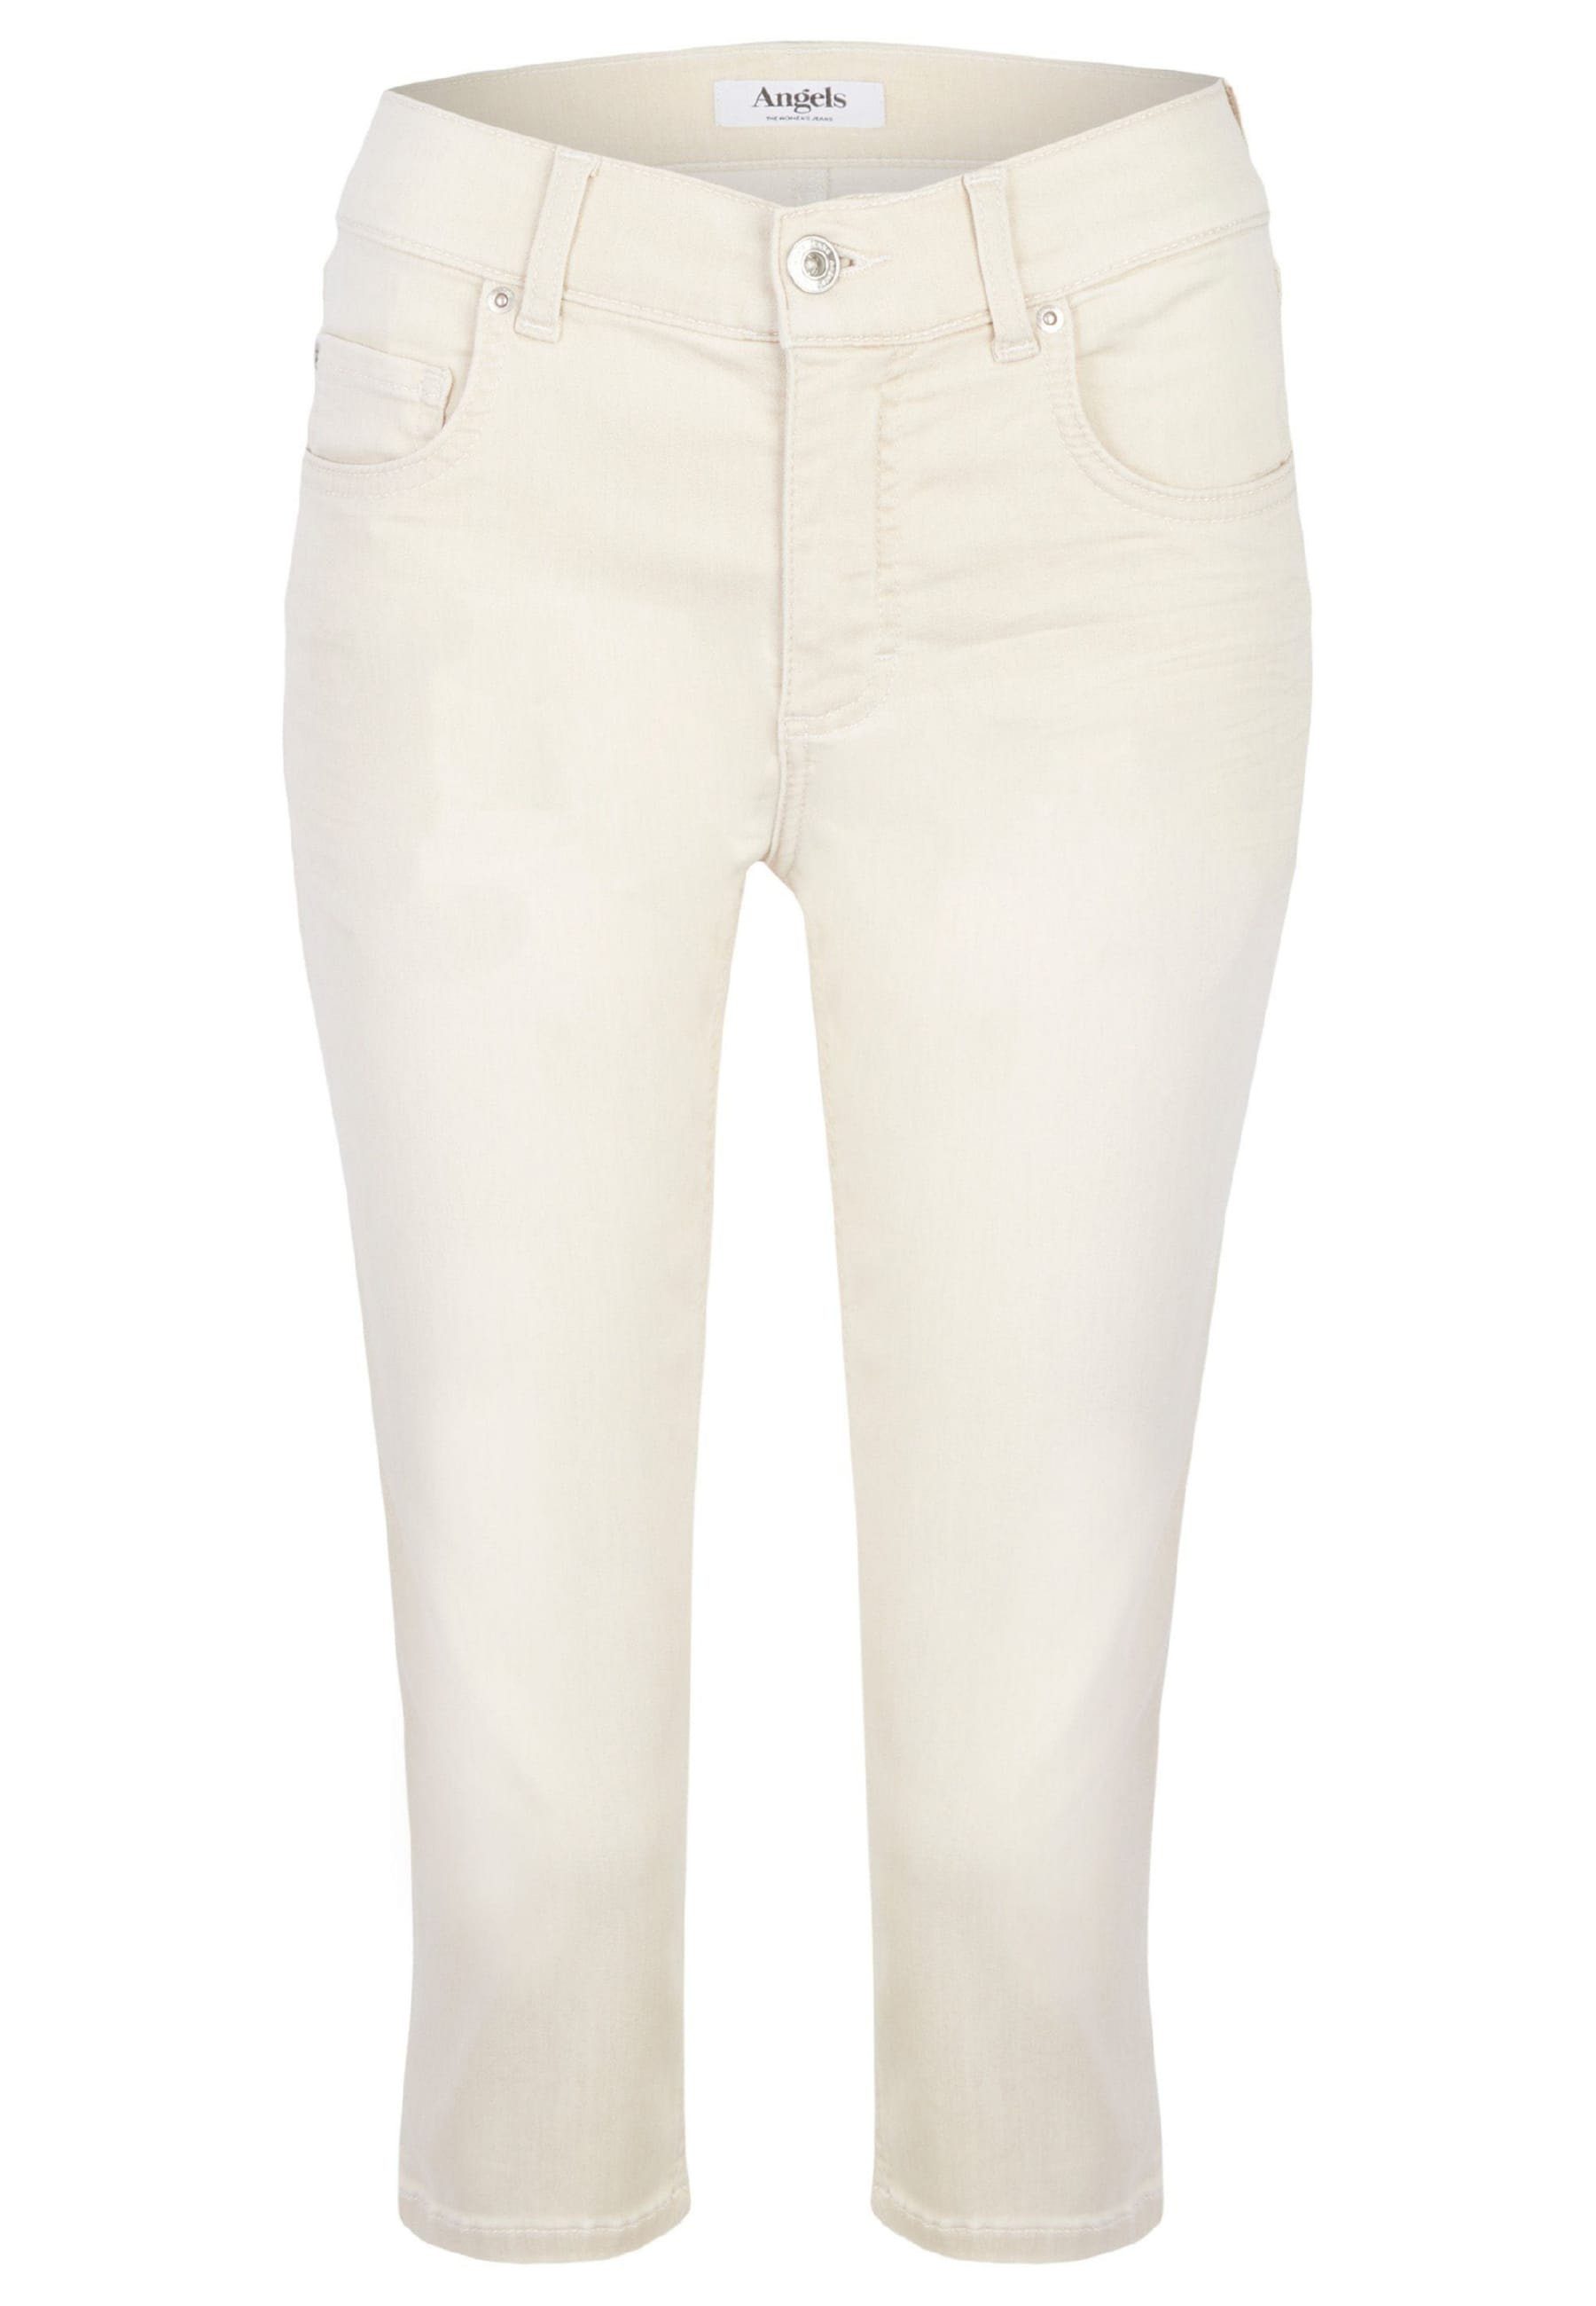 used mit ANGELS Anacapri Label-Applikationen Slim-fit-Jeans beige light Denim Stretch Jeans mit Super